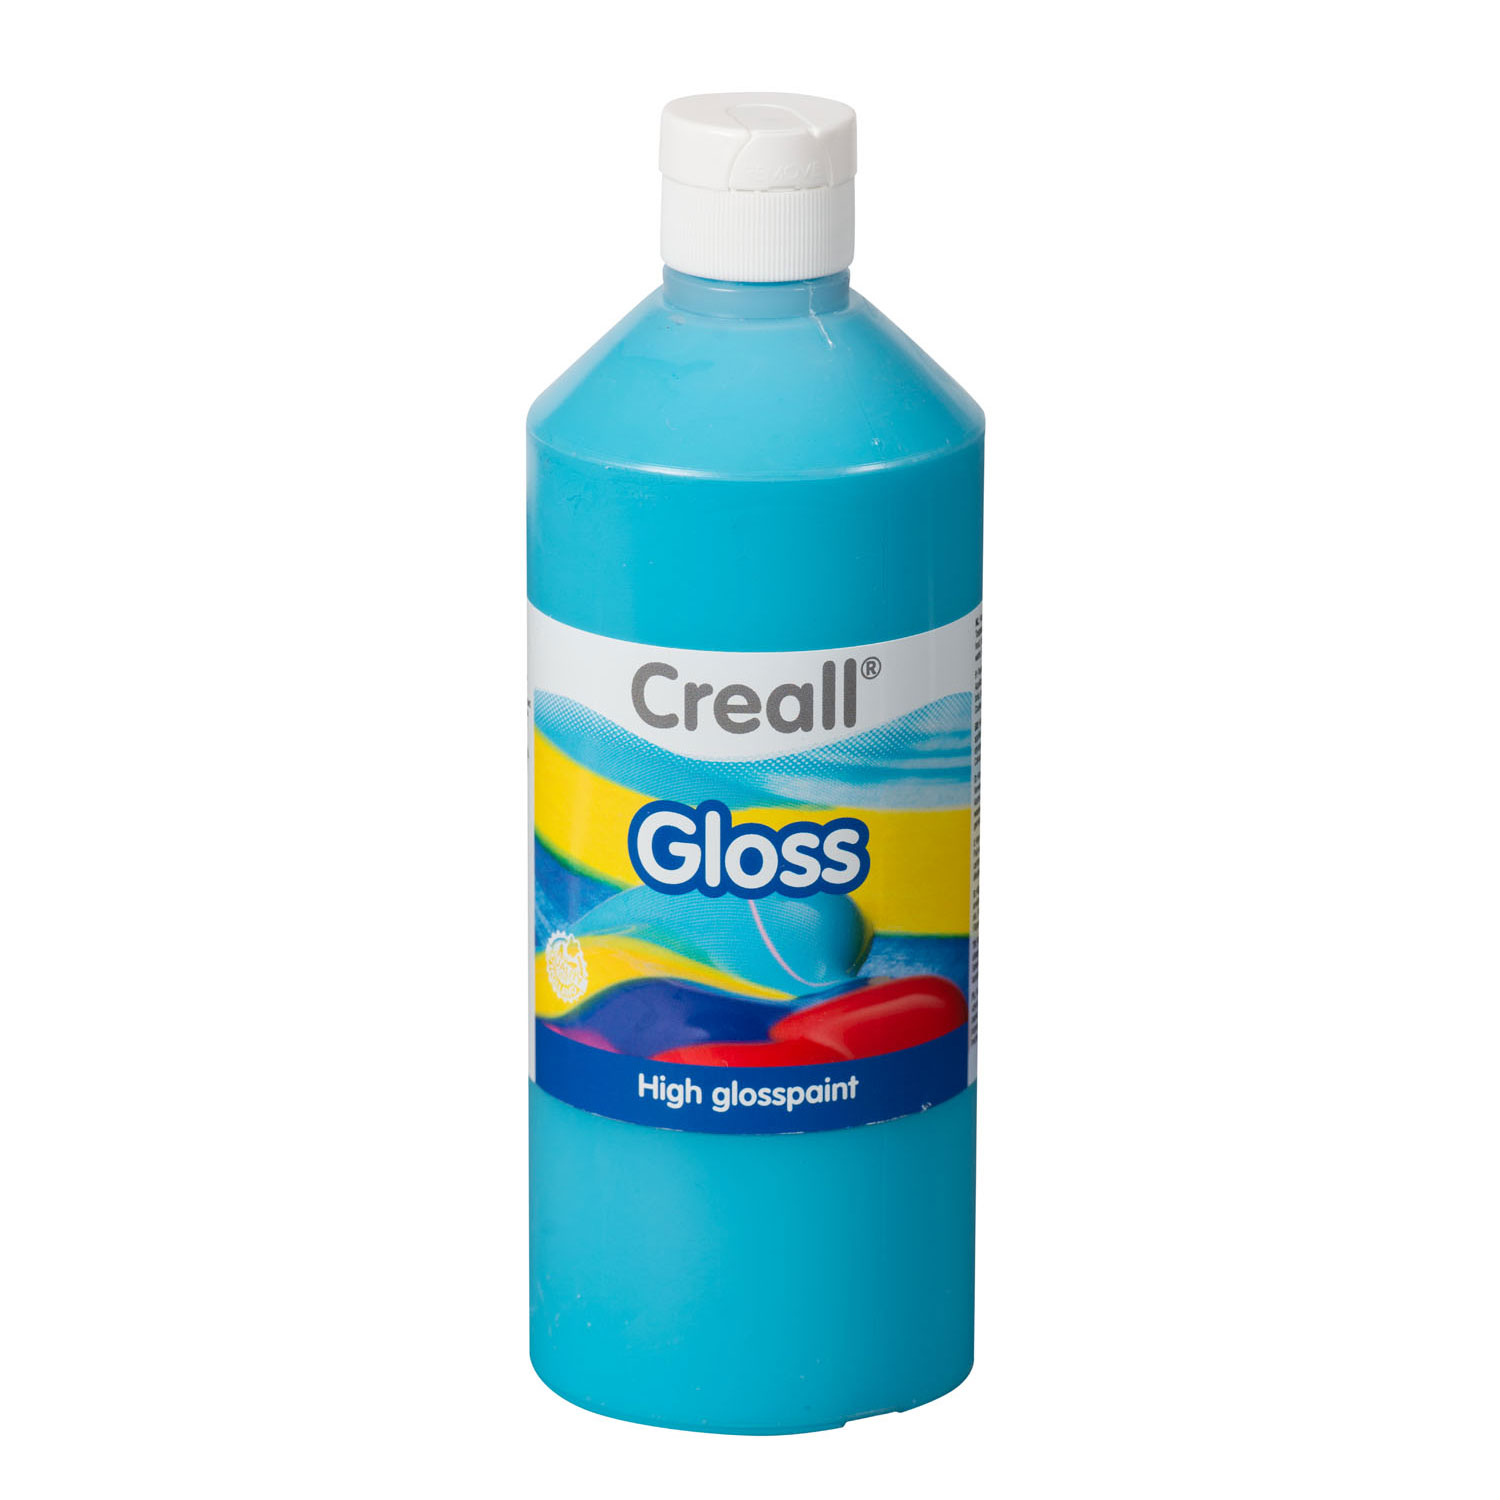 Creall Gloss Peinture Brillante Turquoise, 500 ml